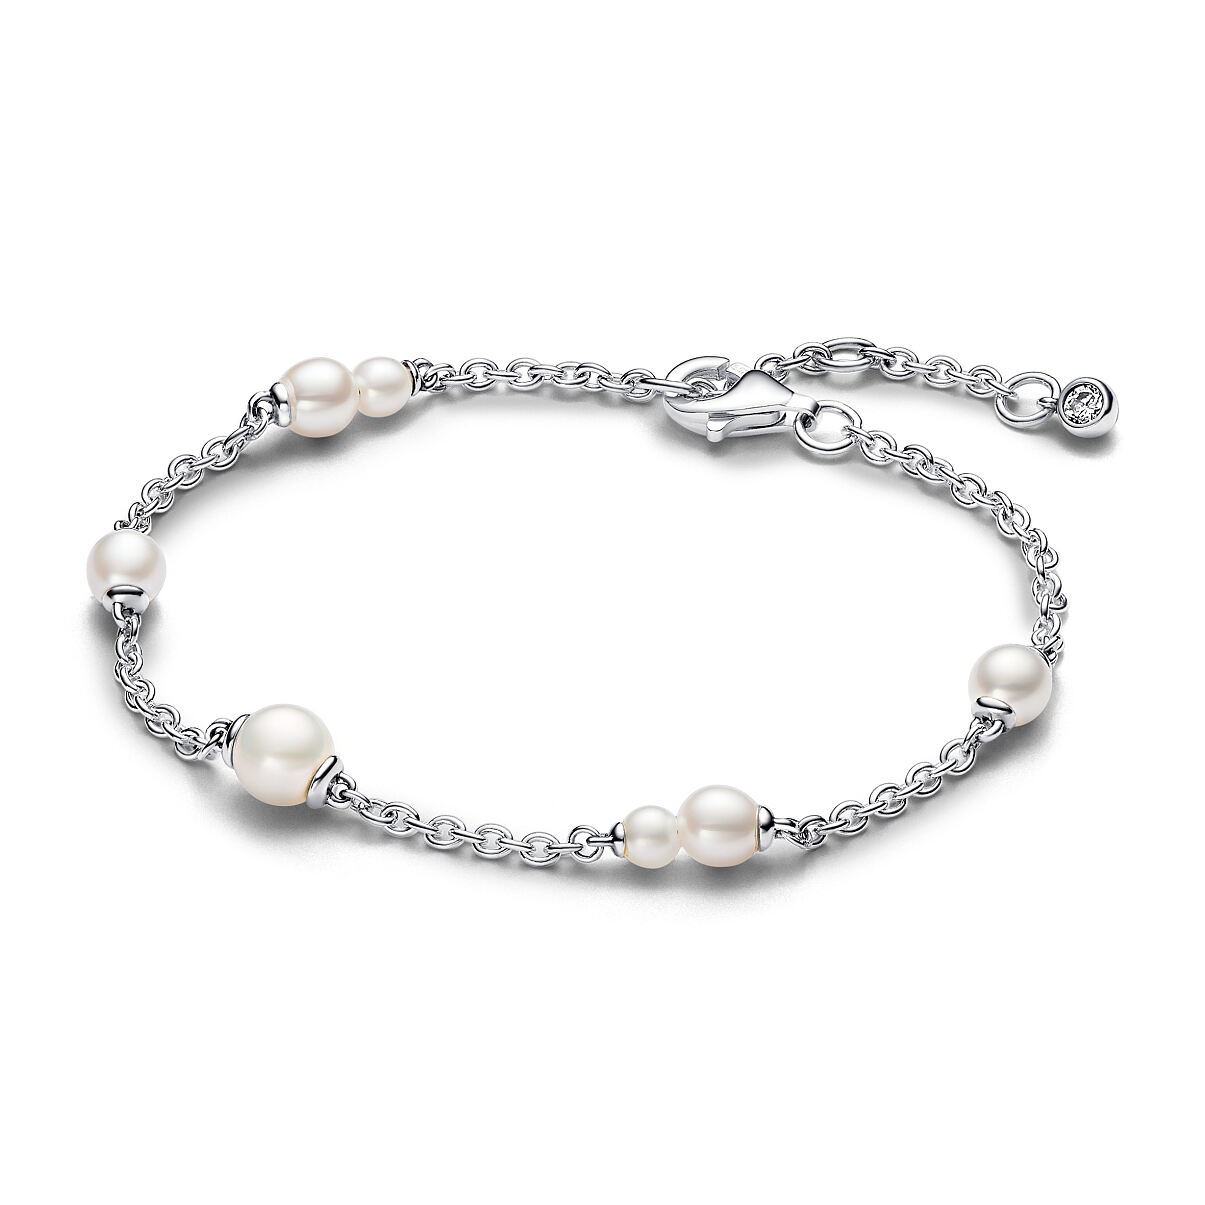 Pandora_Bracelet_Sterling Silver_Freshwater Pearls_Cubic Zirconia_593172C01_249,00 Euro (2)